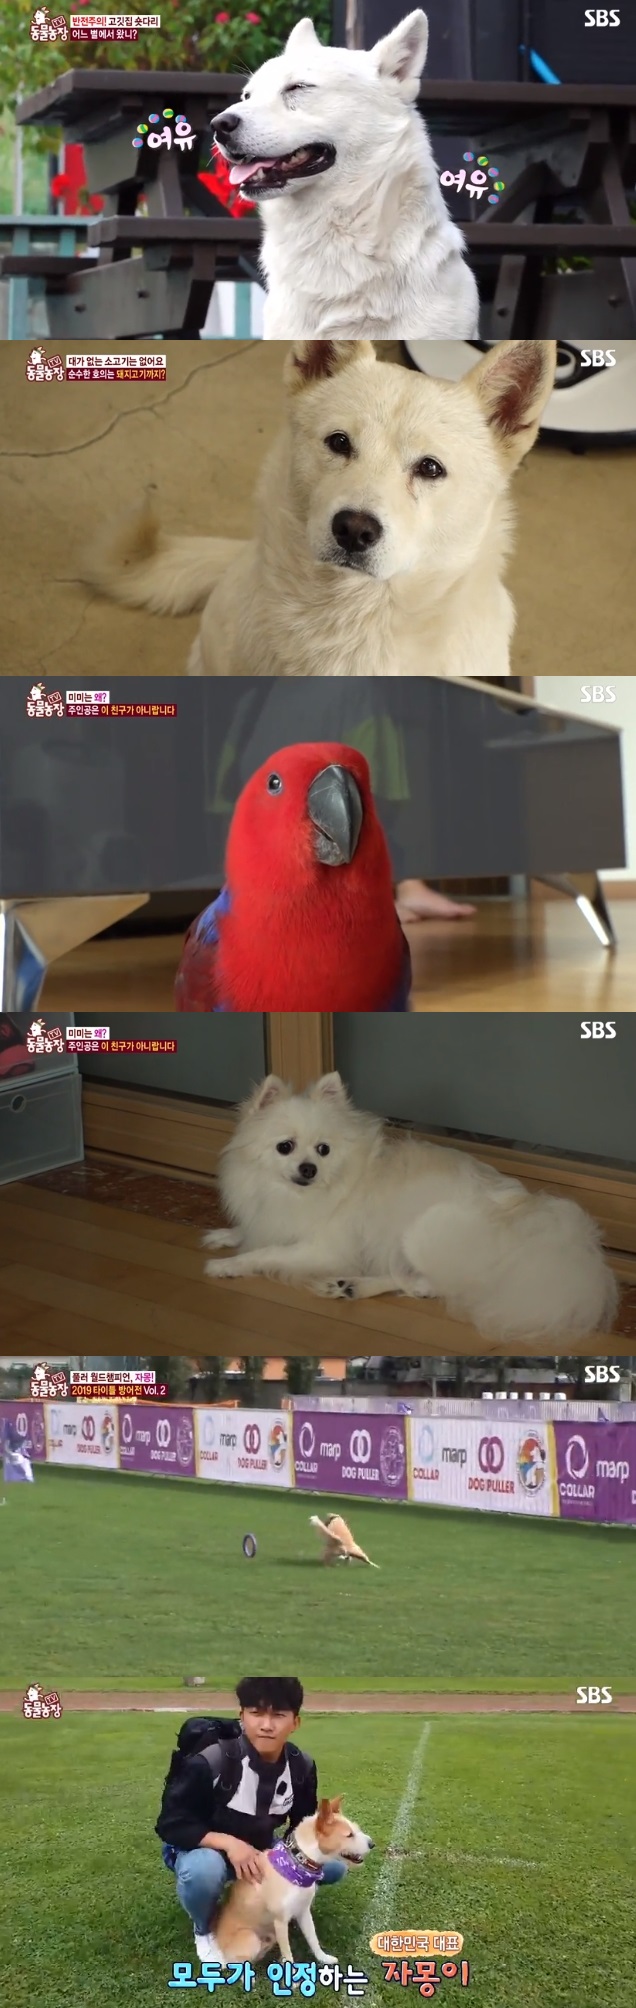 SBS 'TV 동물농장' 캡처